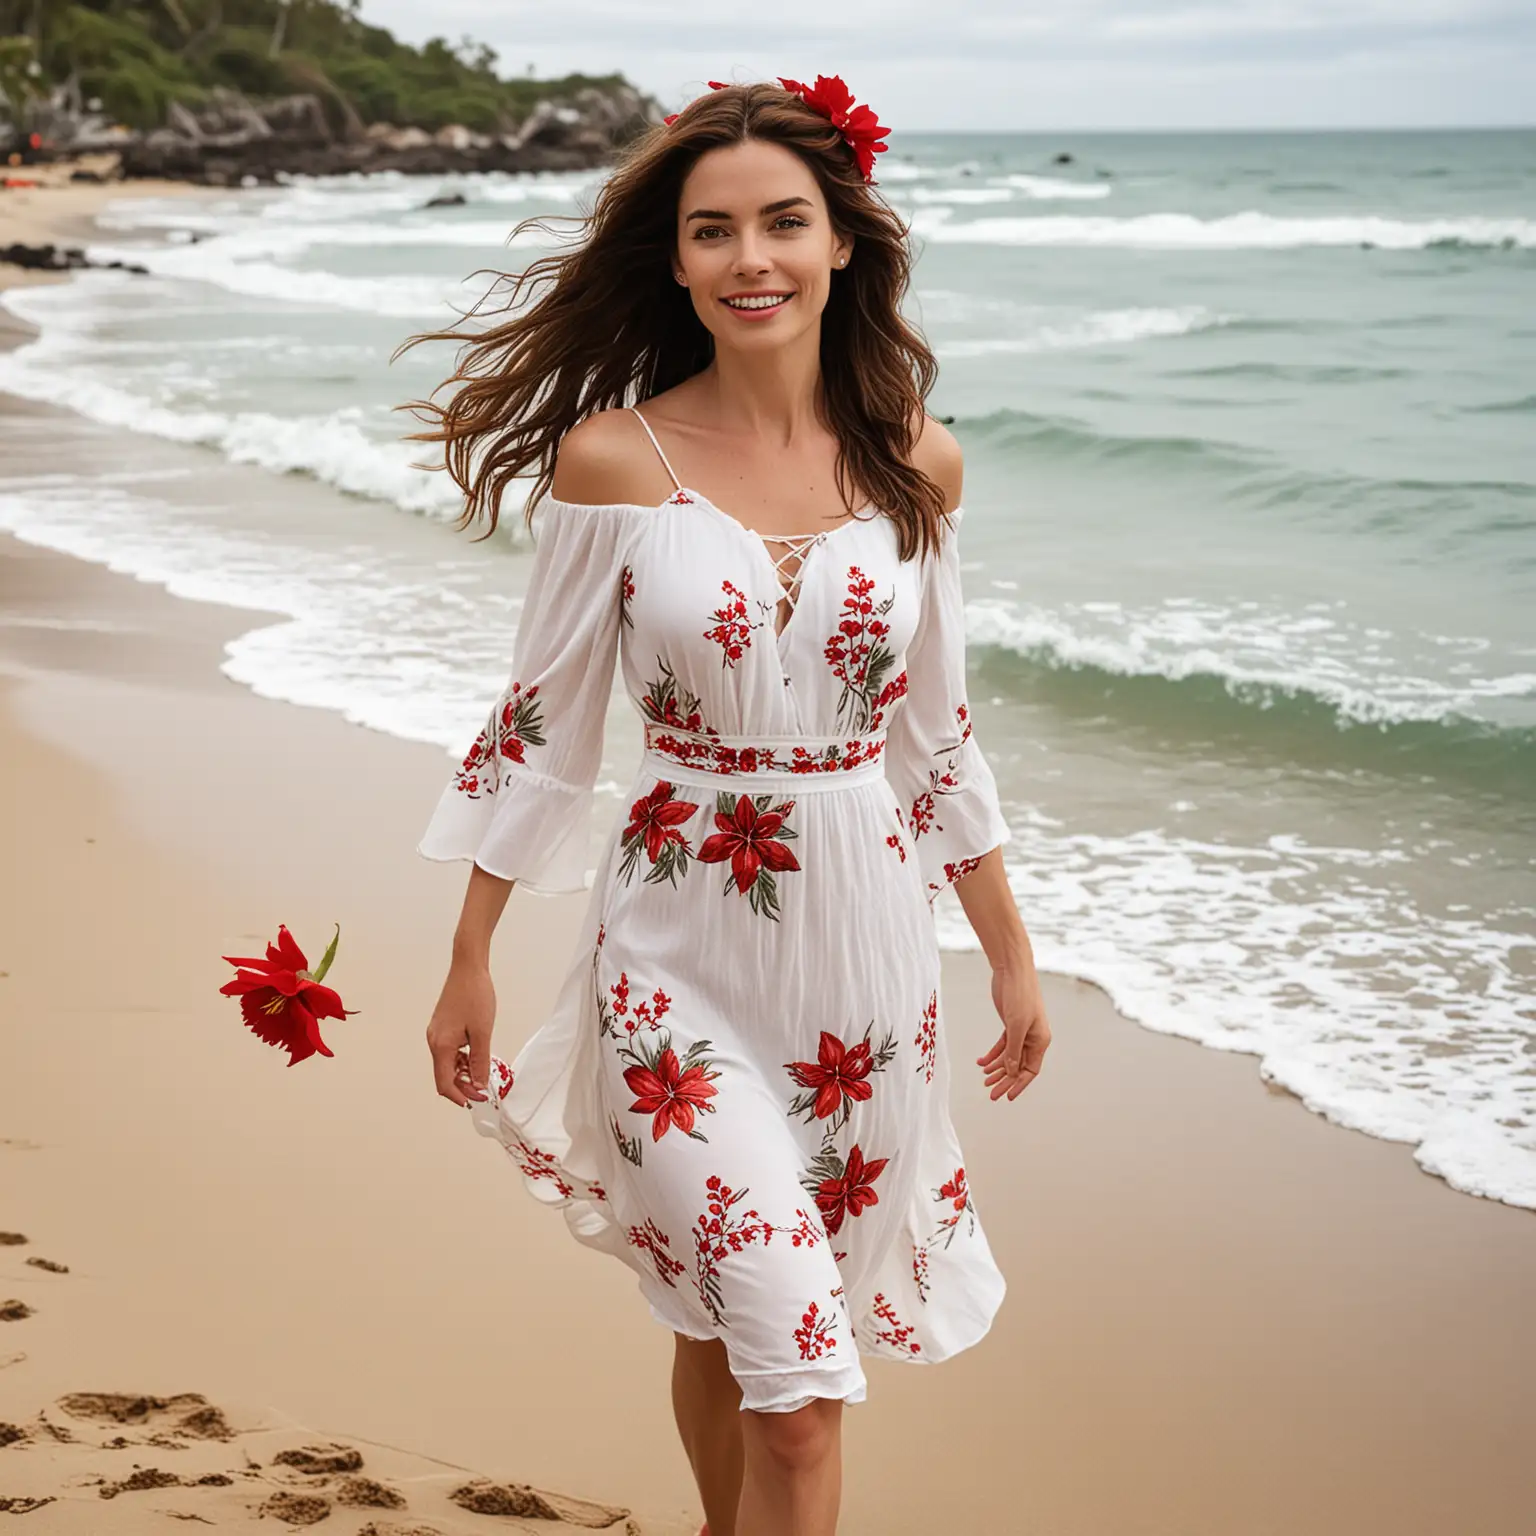 Slim Amelia Heinle in White Tropical Dress Smiling on Beach